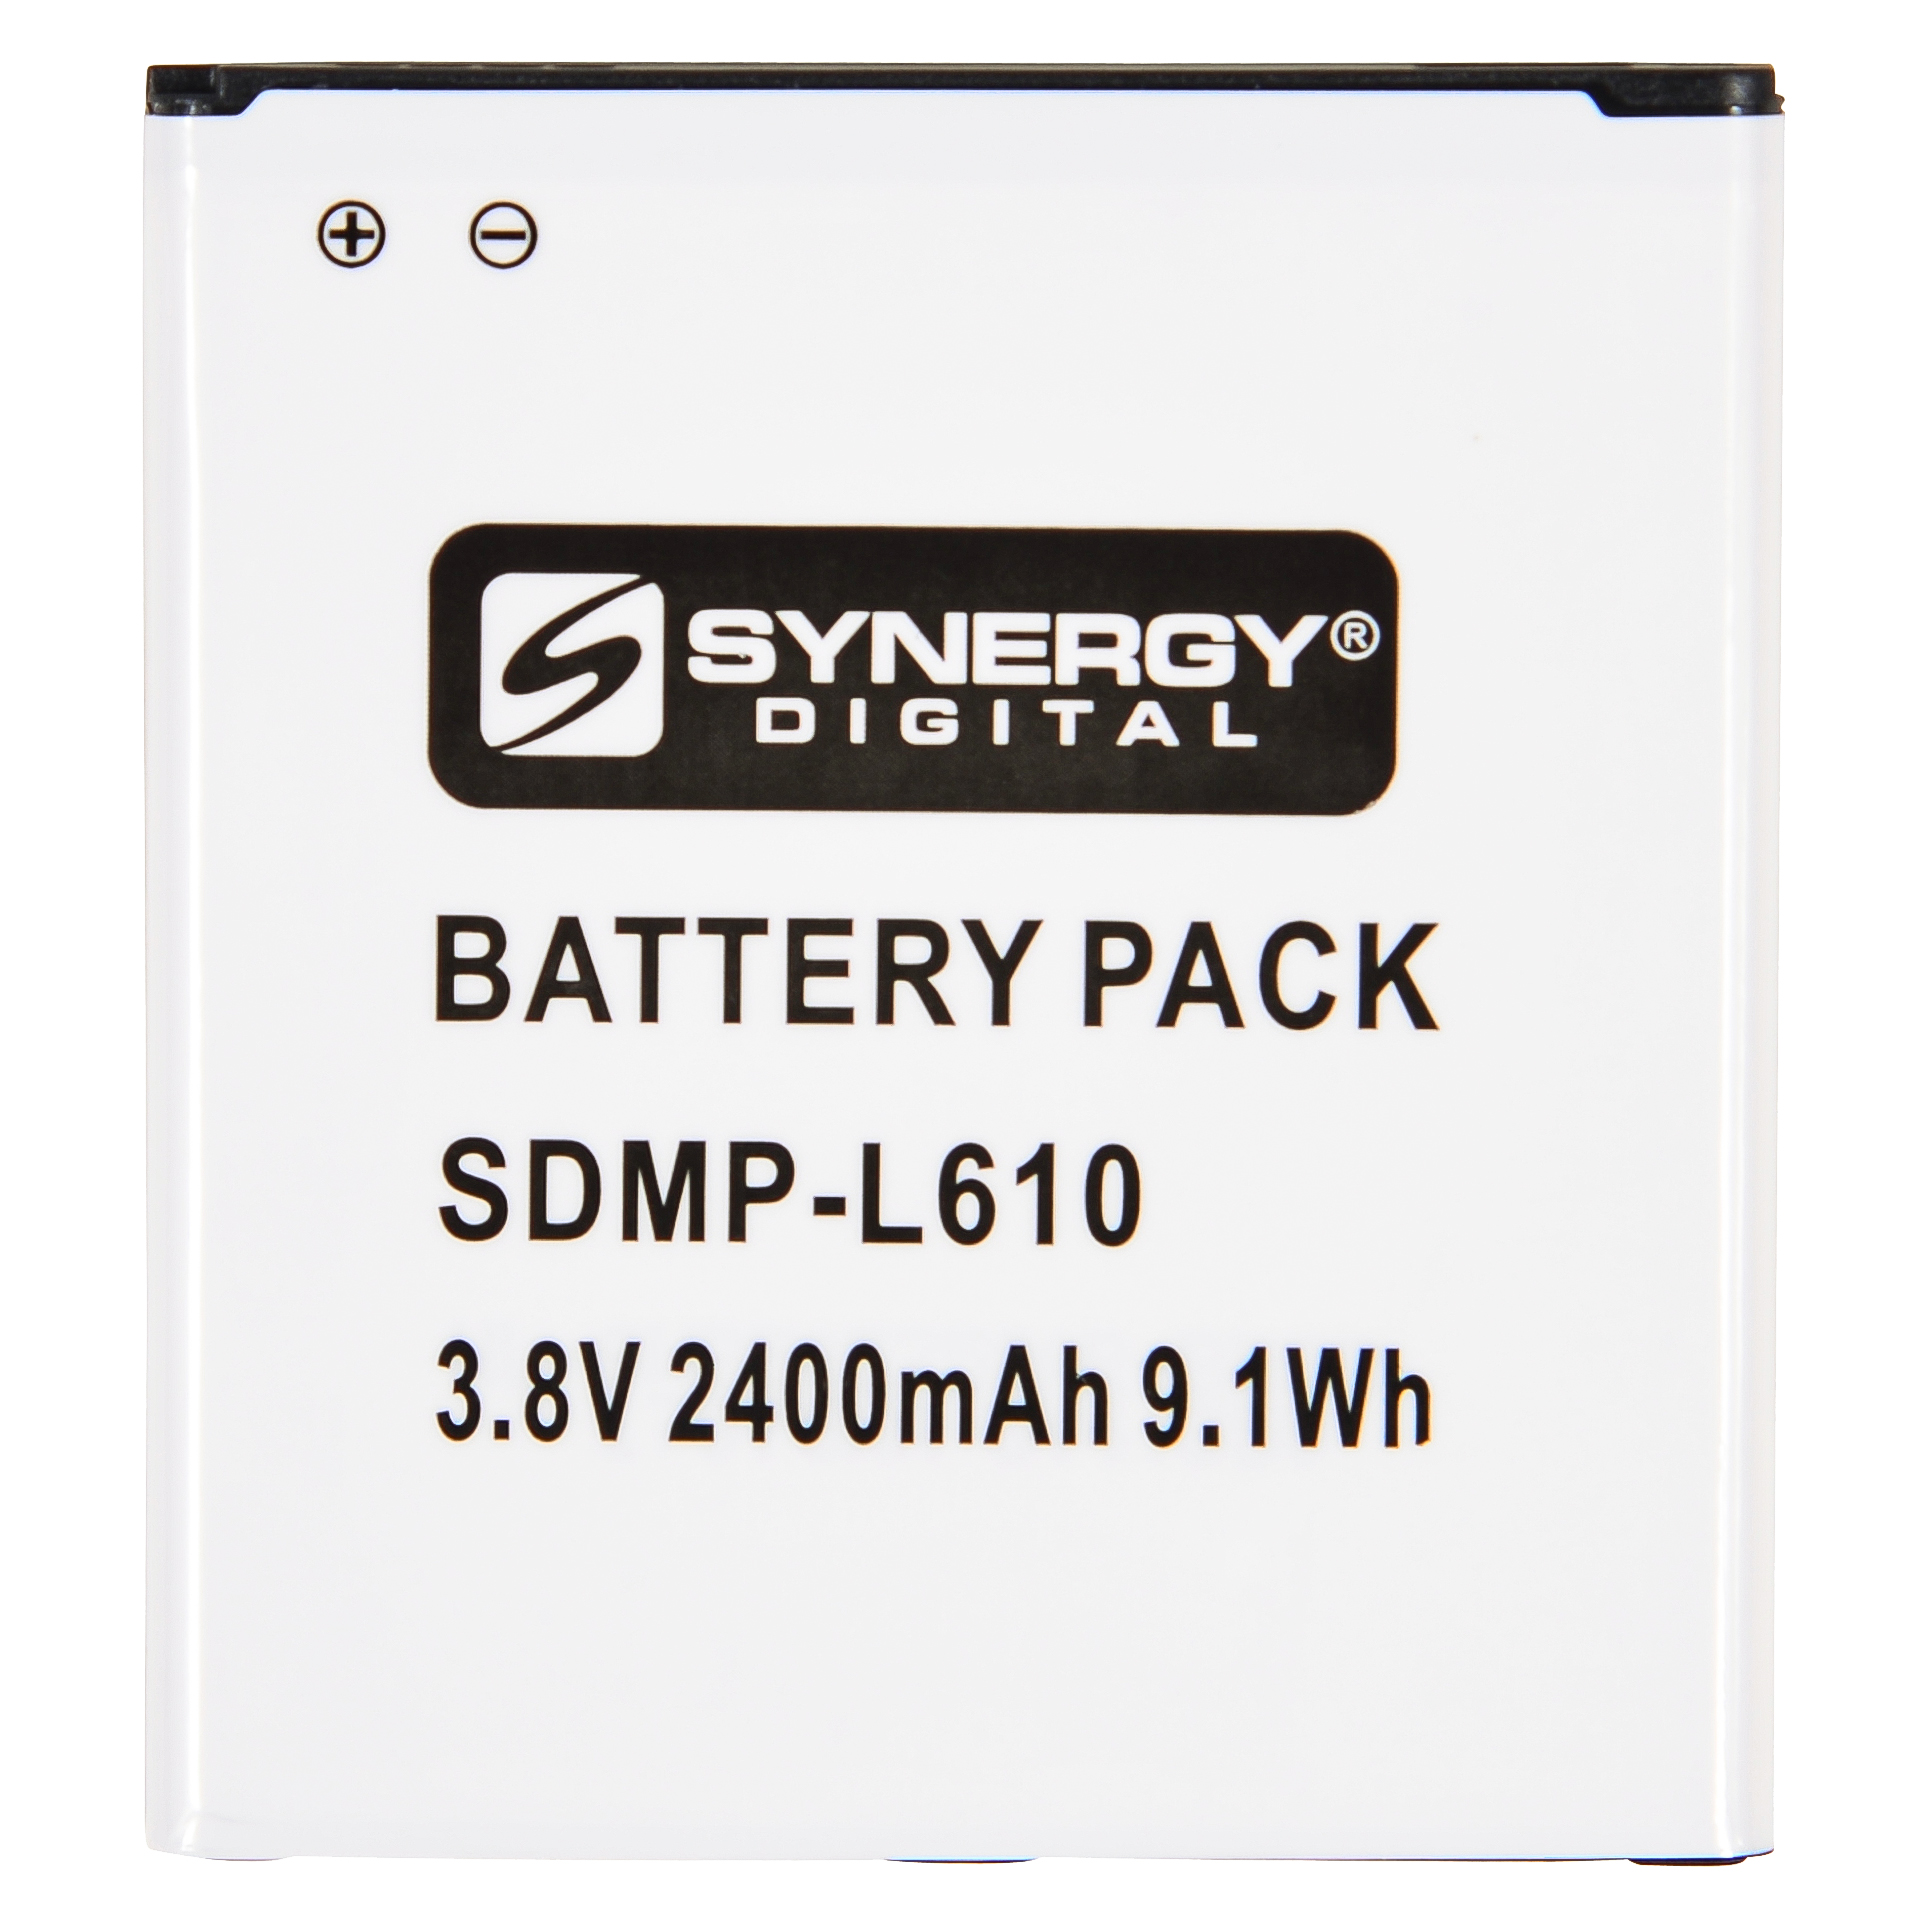 BLI-1433-2.4 LI-ION Battery - Rechargeable Ultra High Capacity (LI-ION 3.8V 2400mAh) - Replacement For Samsung  EB-BG530  EB-BG530BBC  EB-BG530BBE Cellphone Battery